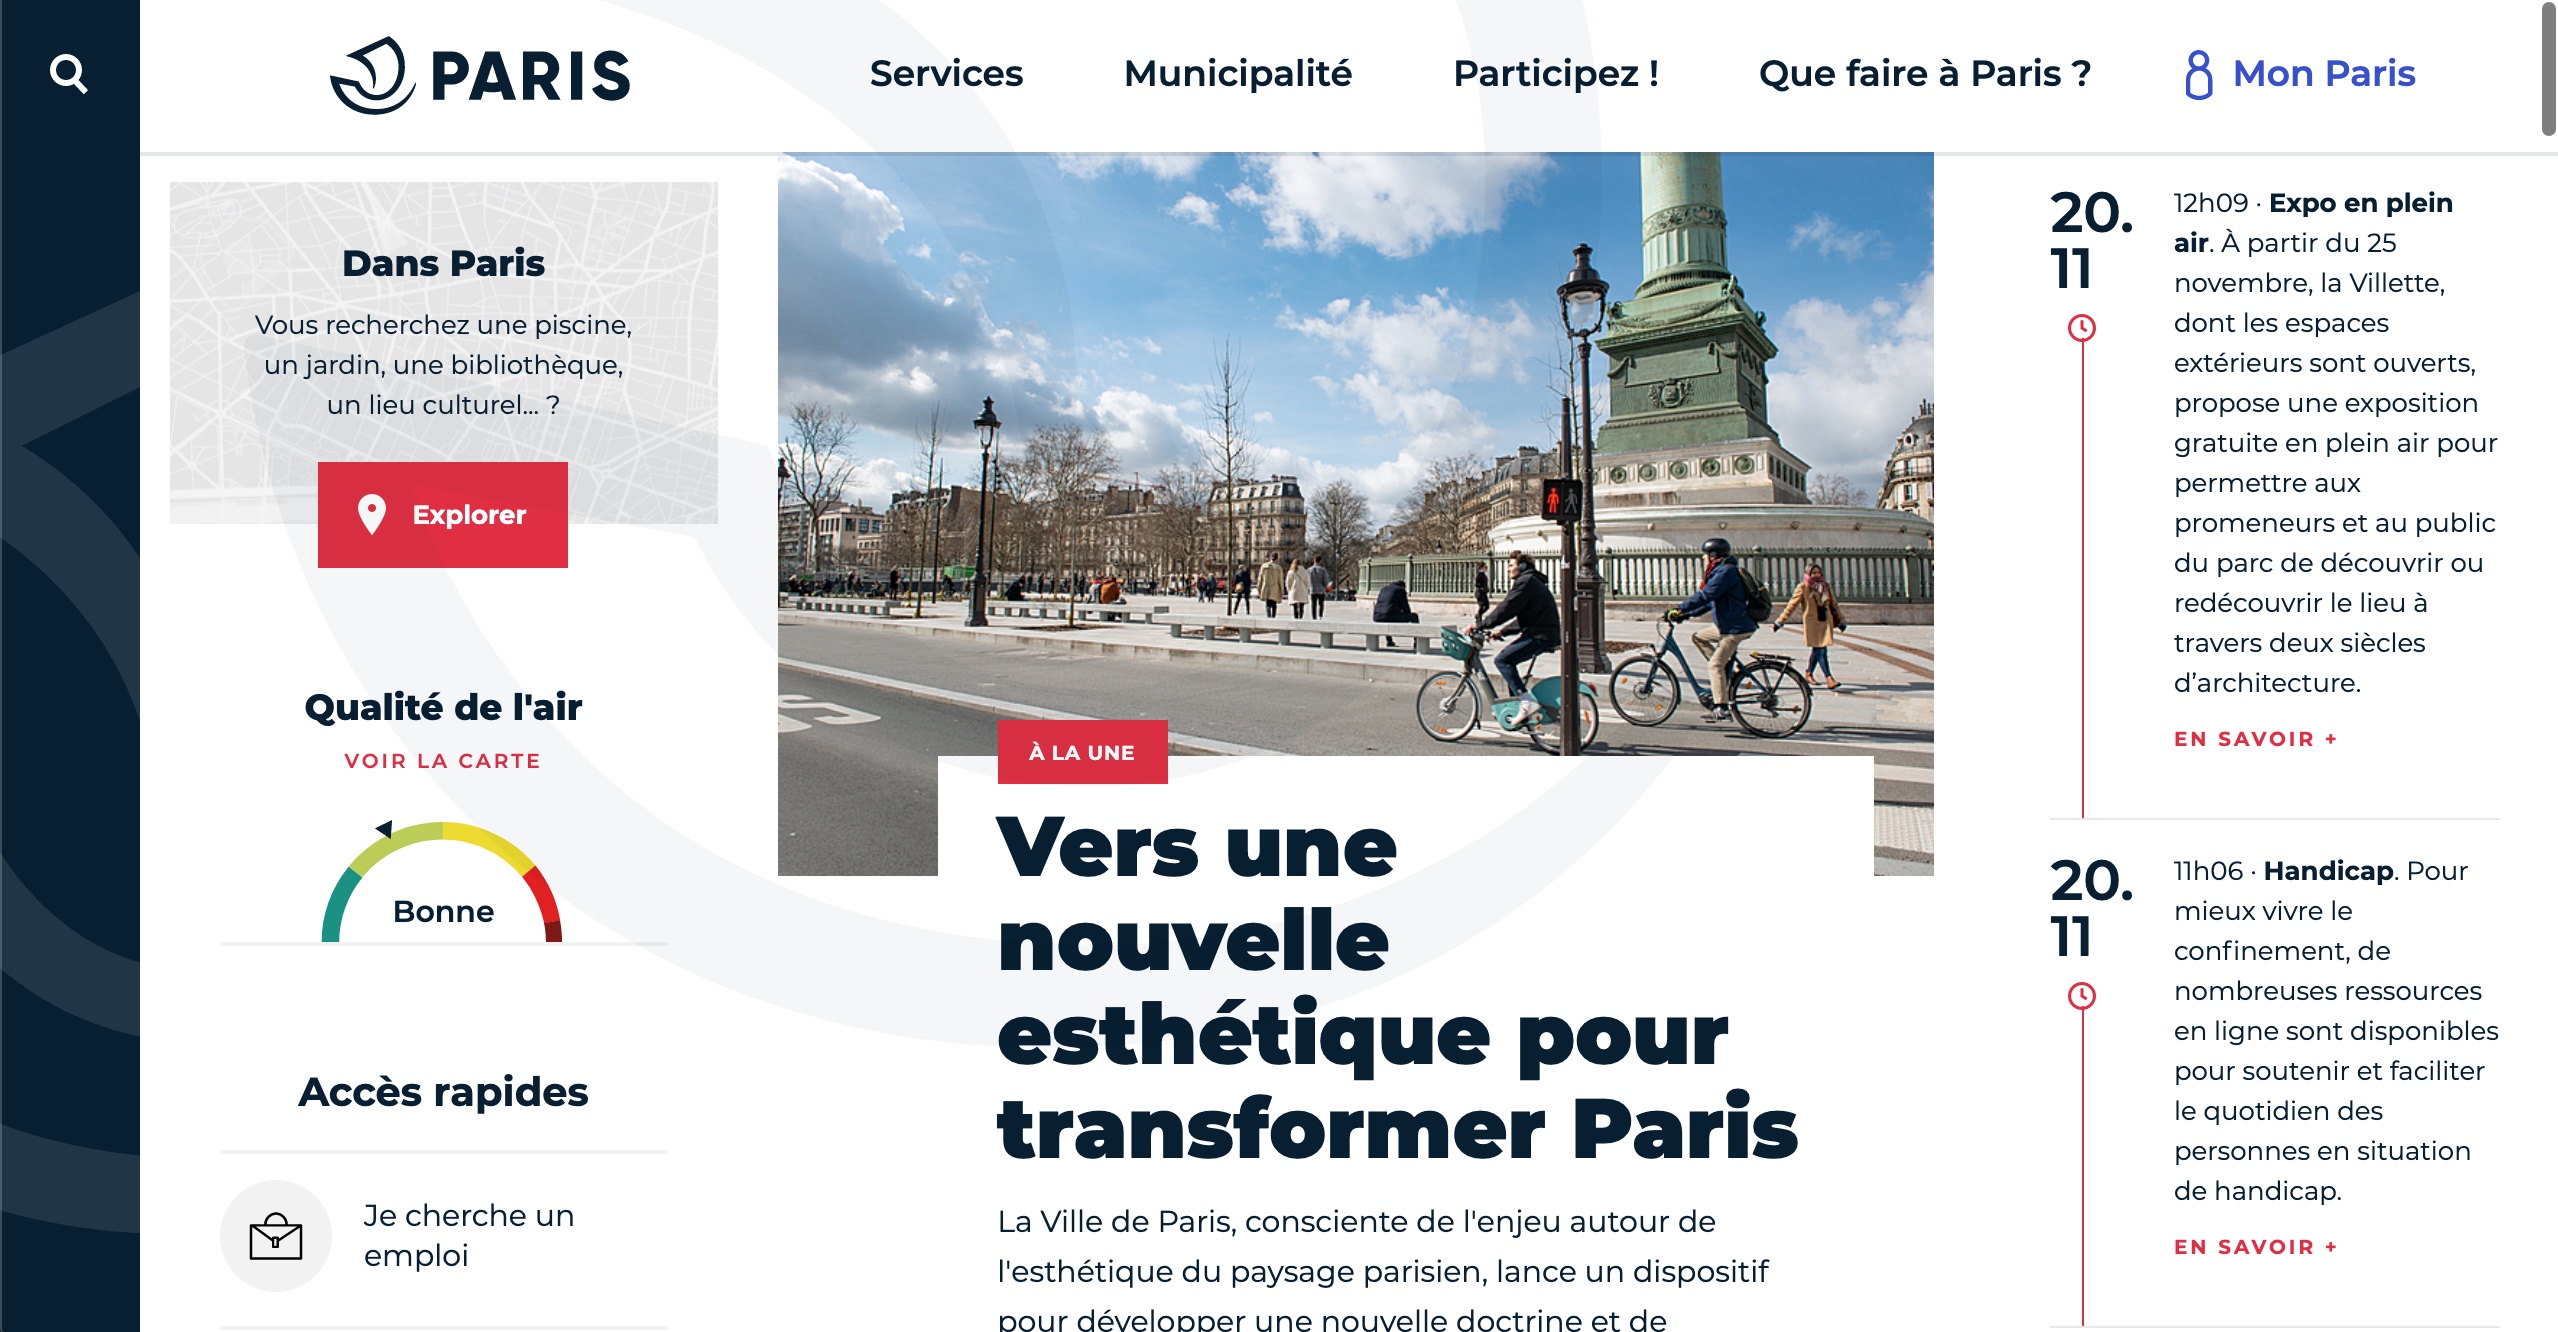 City of Paris main website (https://paris.fr/)